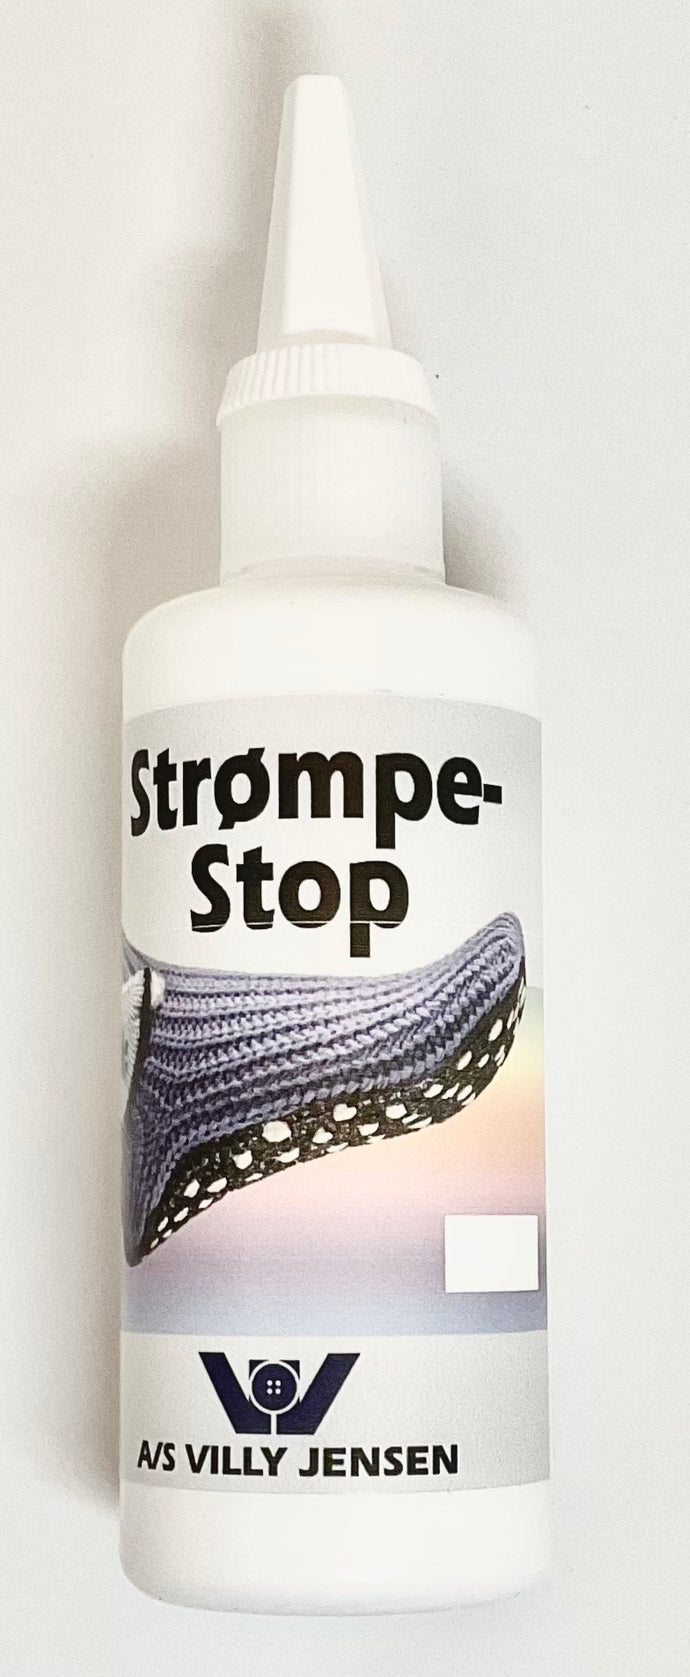 Strømpe-Stop